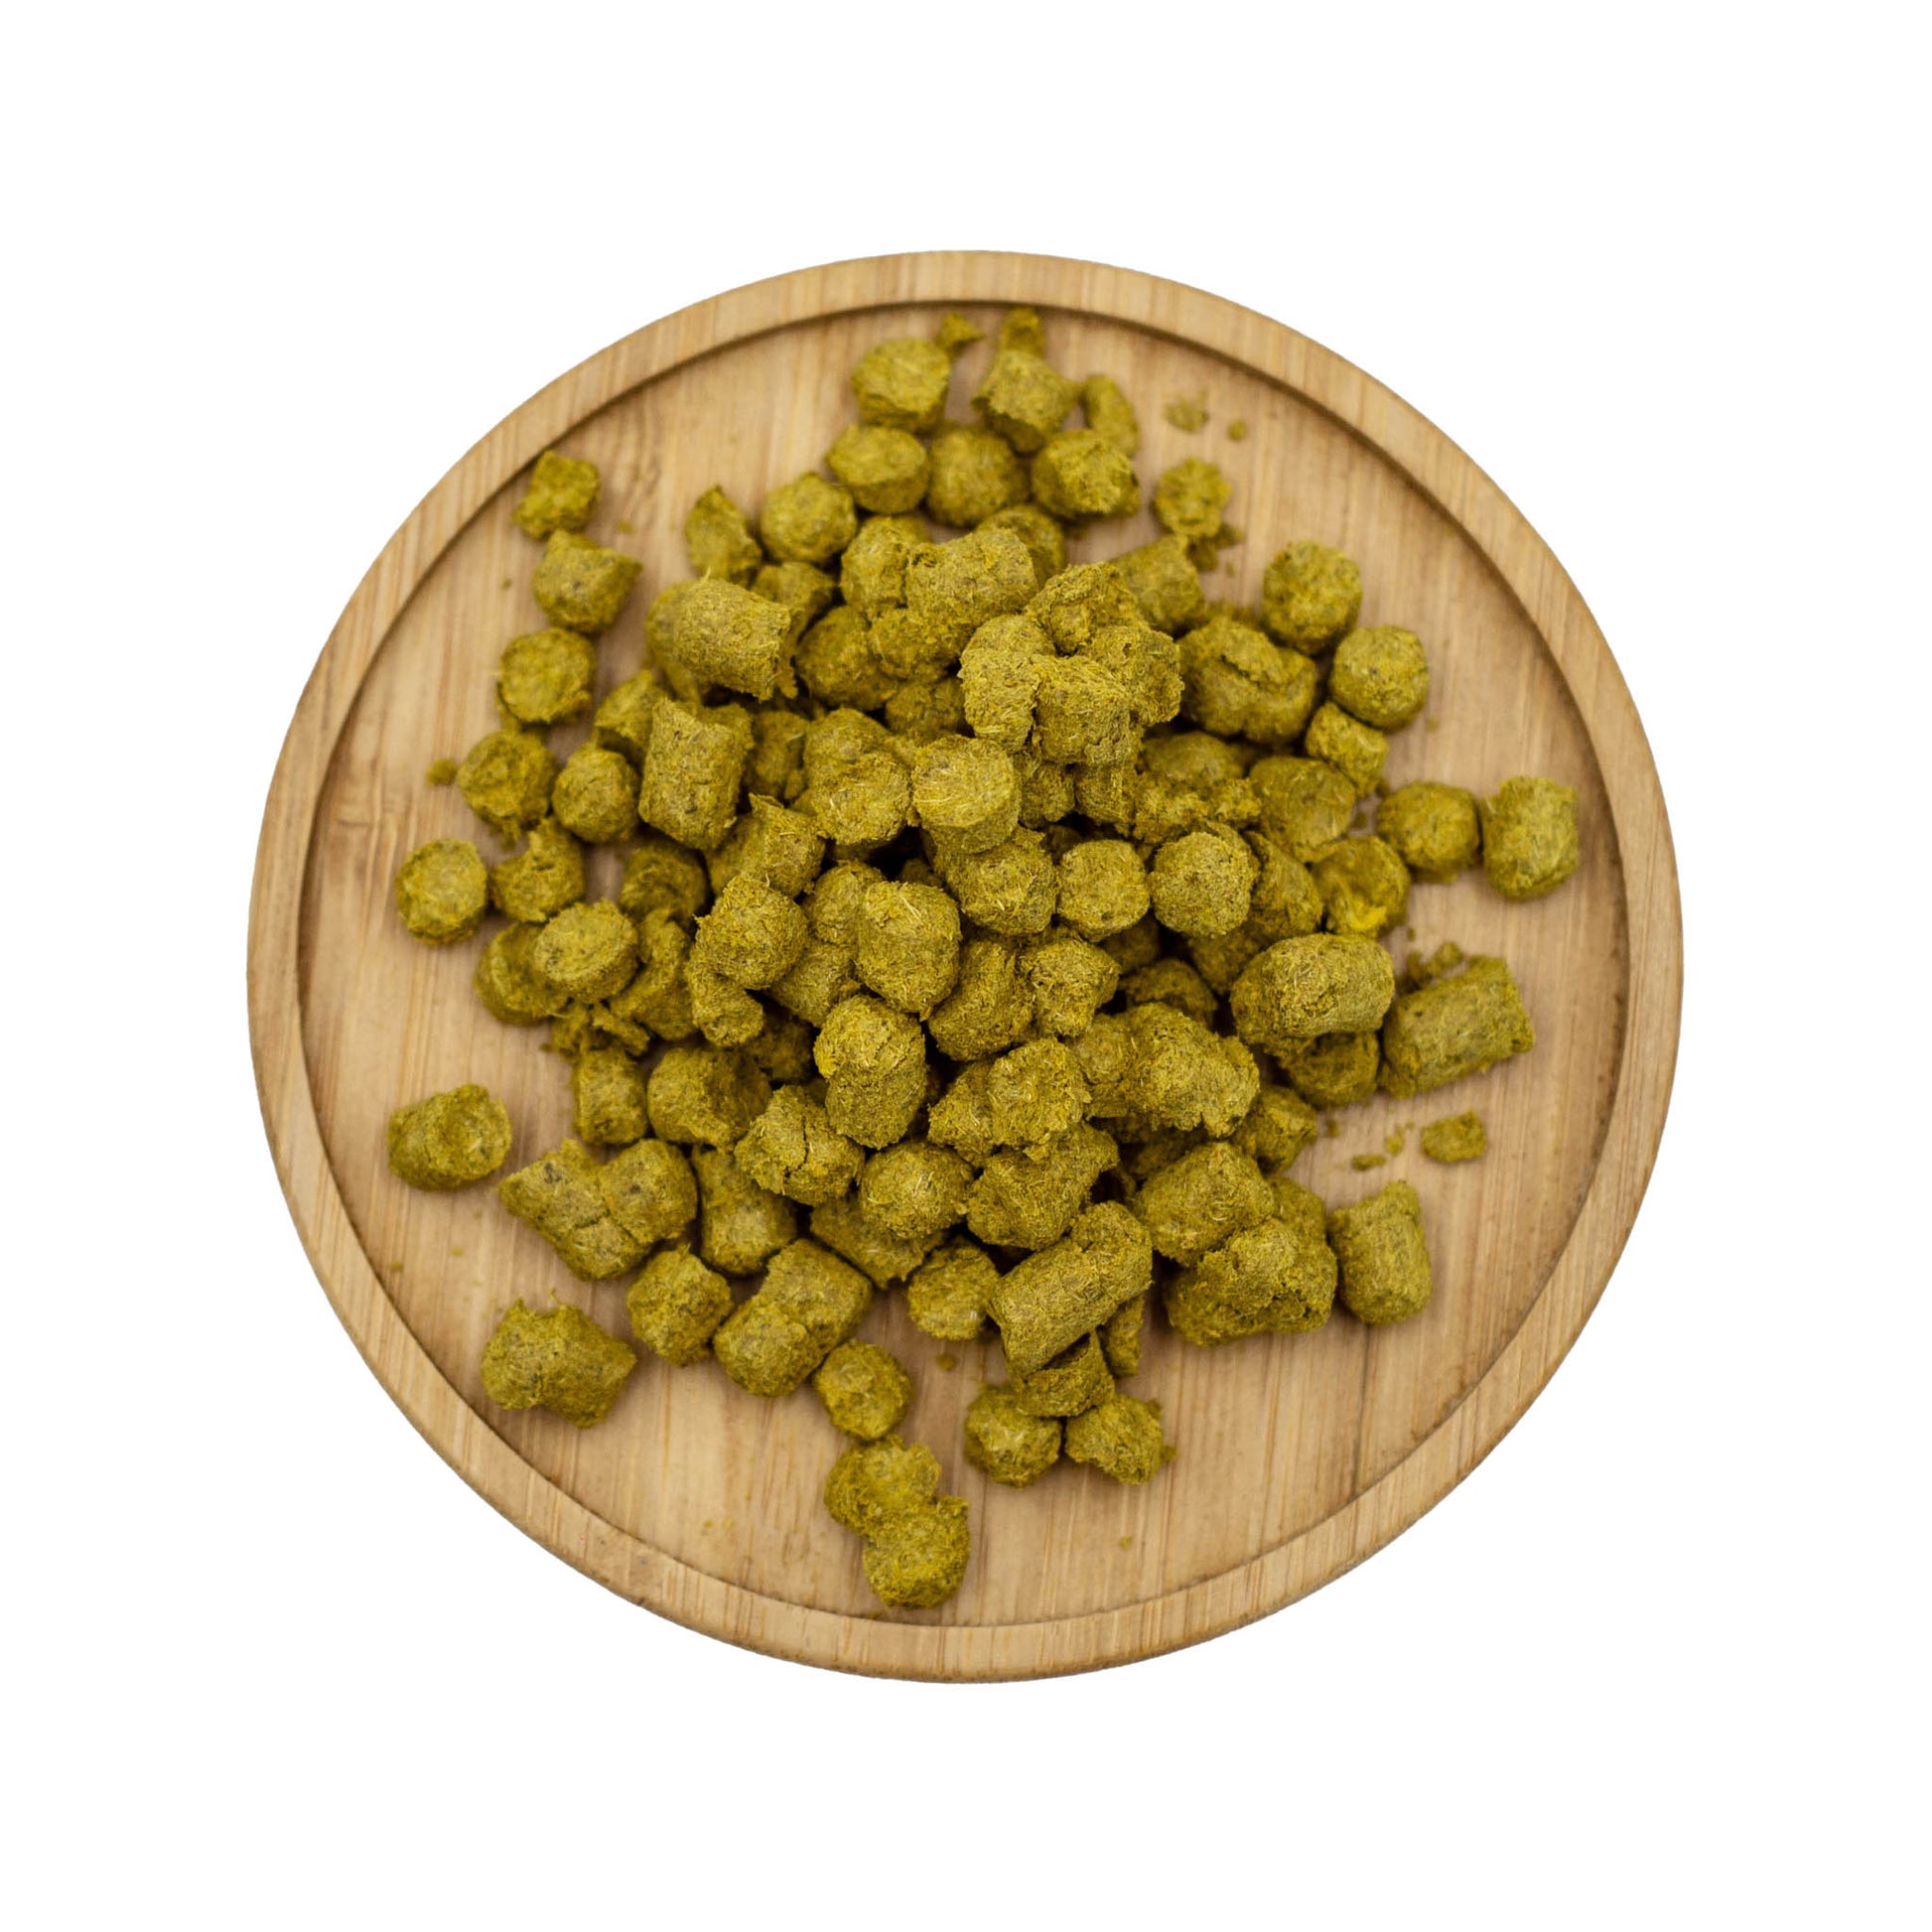 50g packet of Ekuanot hop pellets for beer making